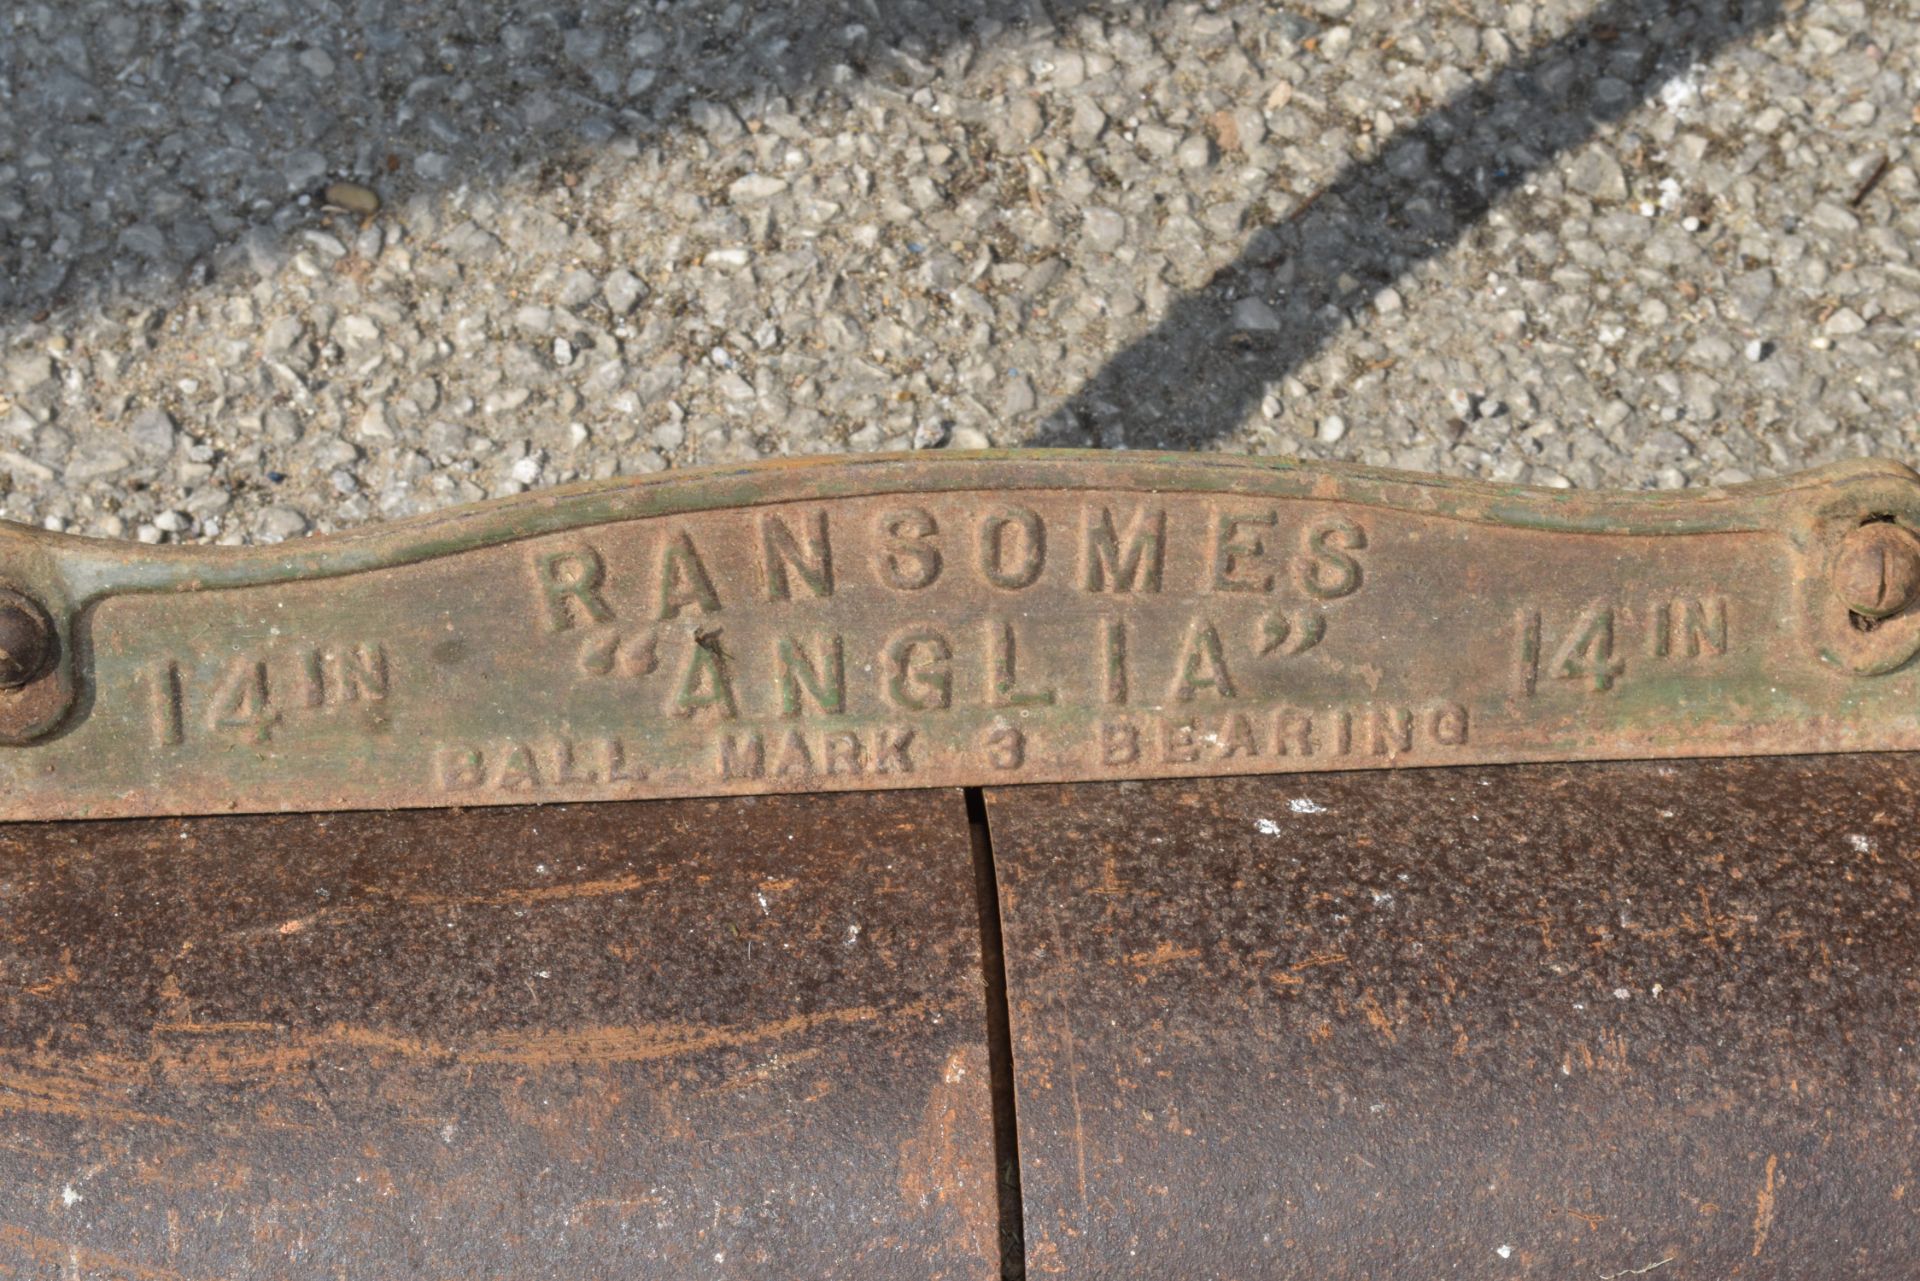 Vintage ransoms push mower - Image 2 of 2